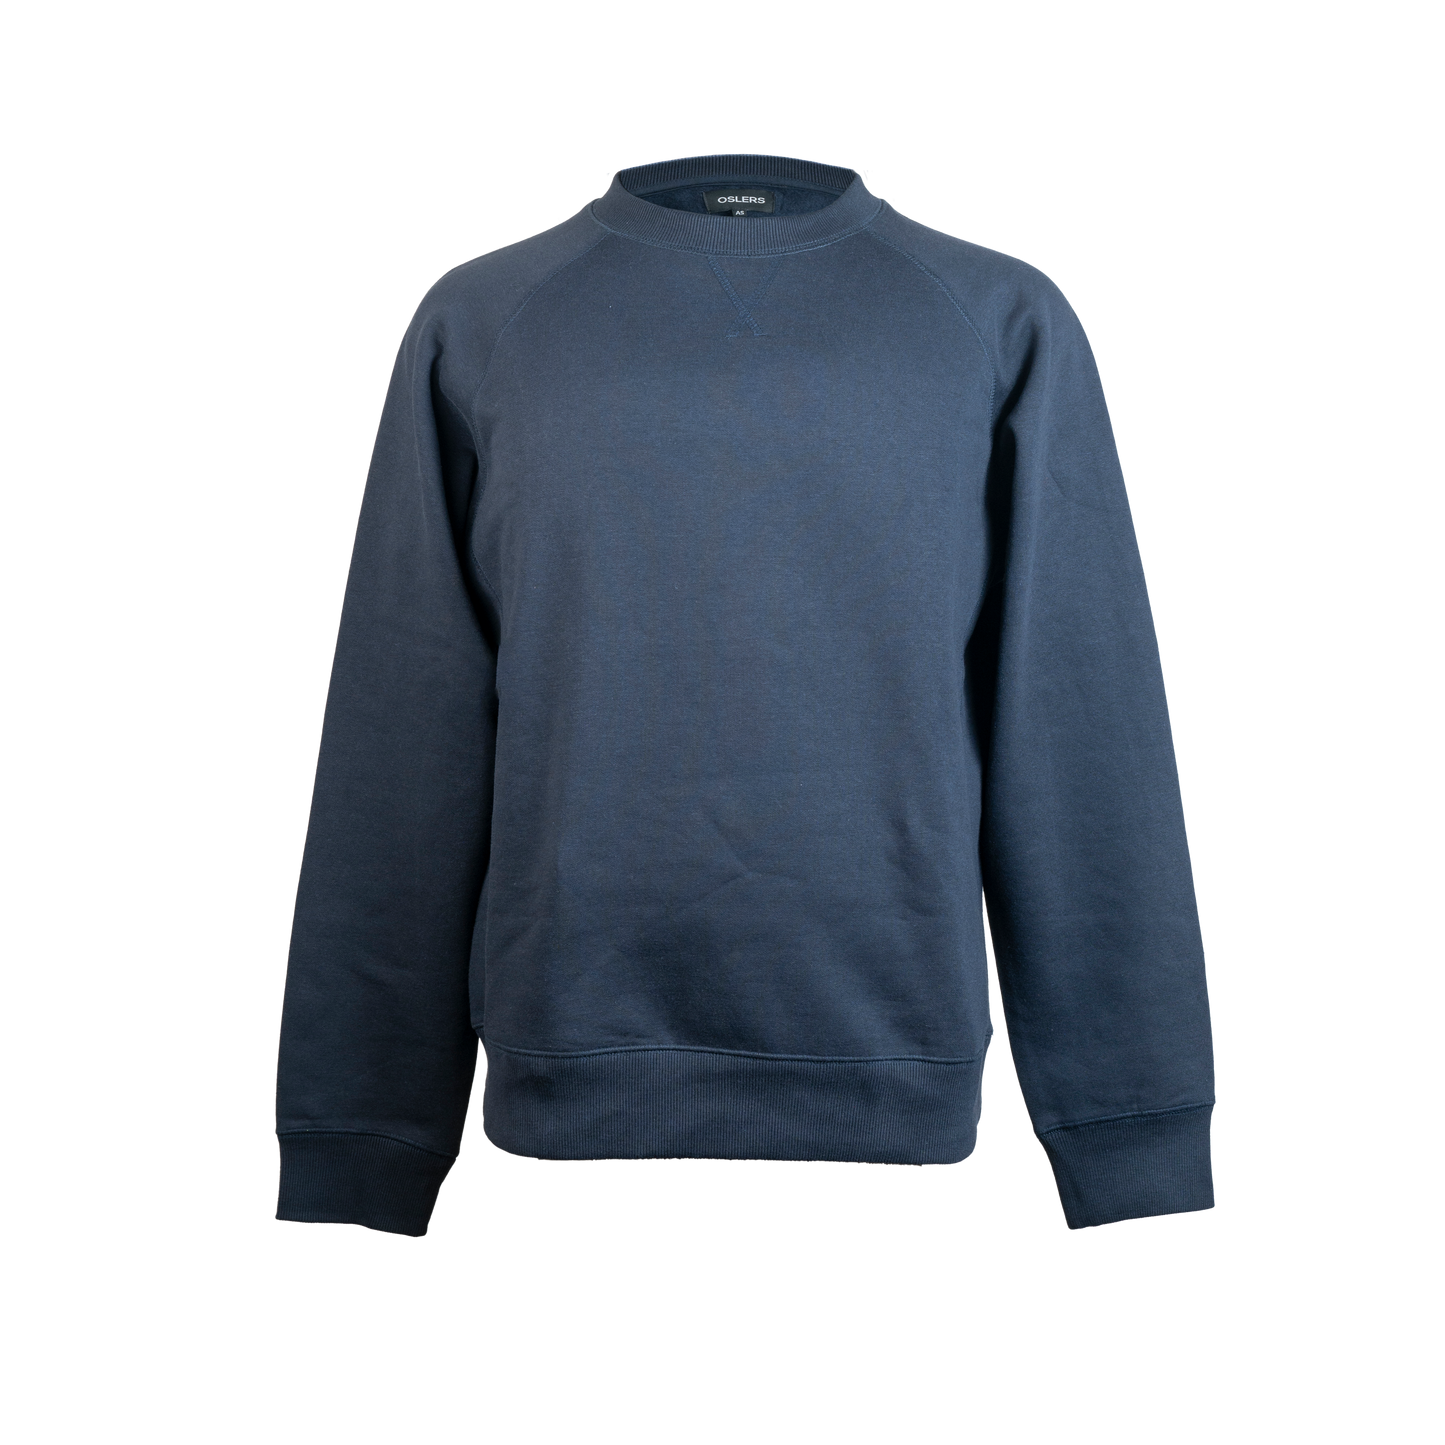 Unisex Crewneck Long Sleeve Casual Warm Fleece Pullover Sweatshirt